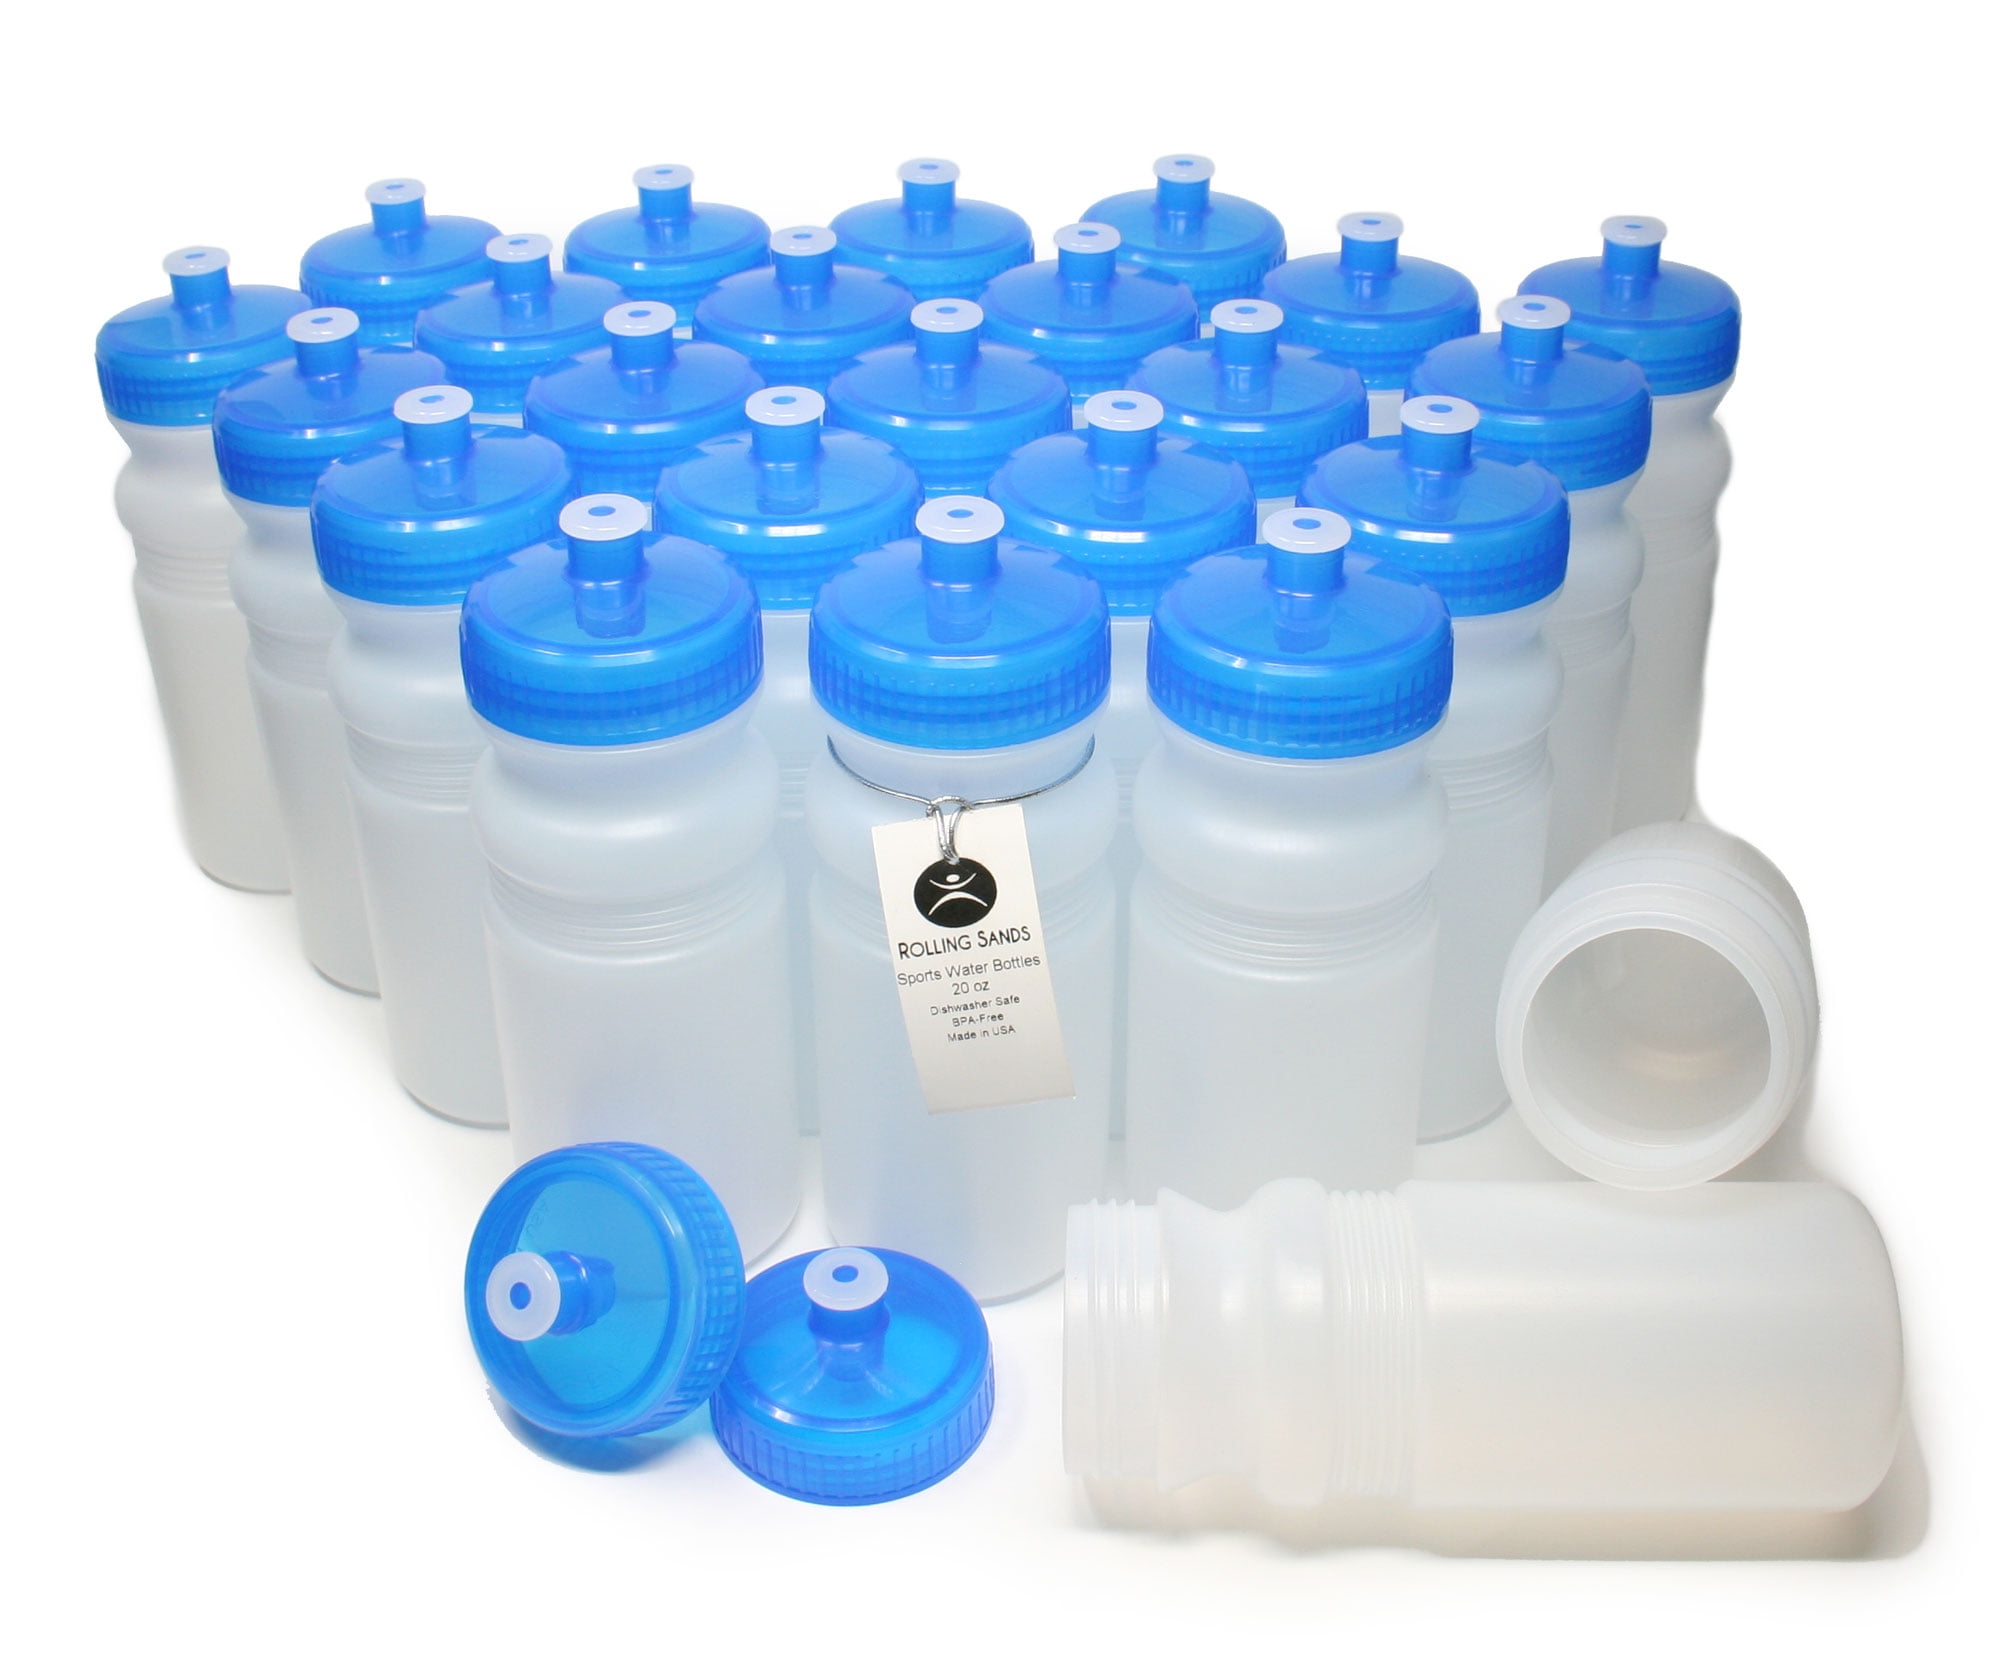 20 Oz. Water Bottle Bpa Free Made In USA 113750